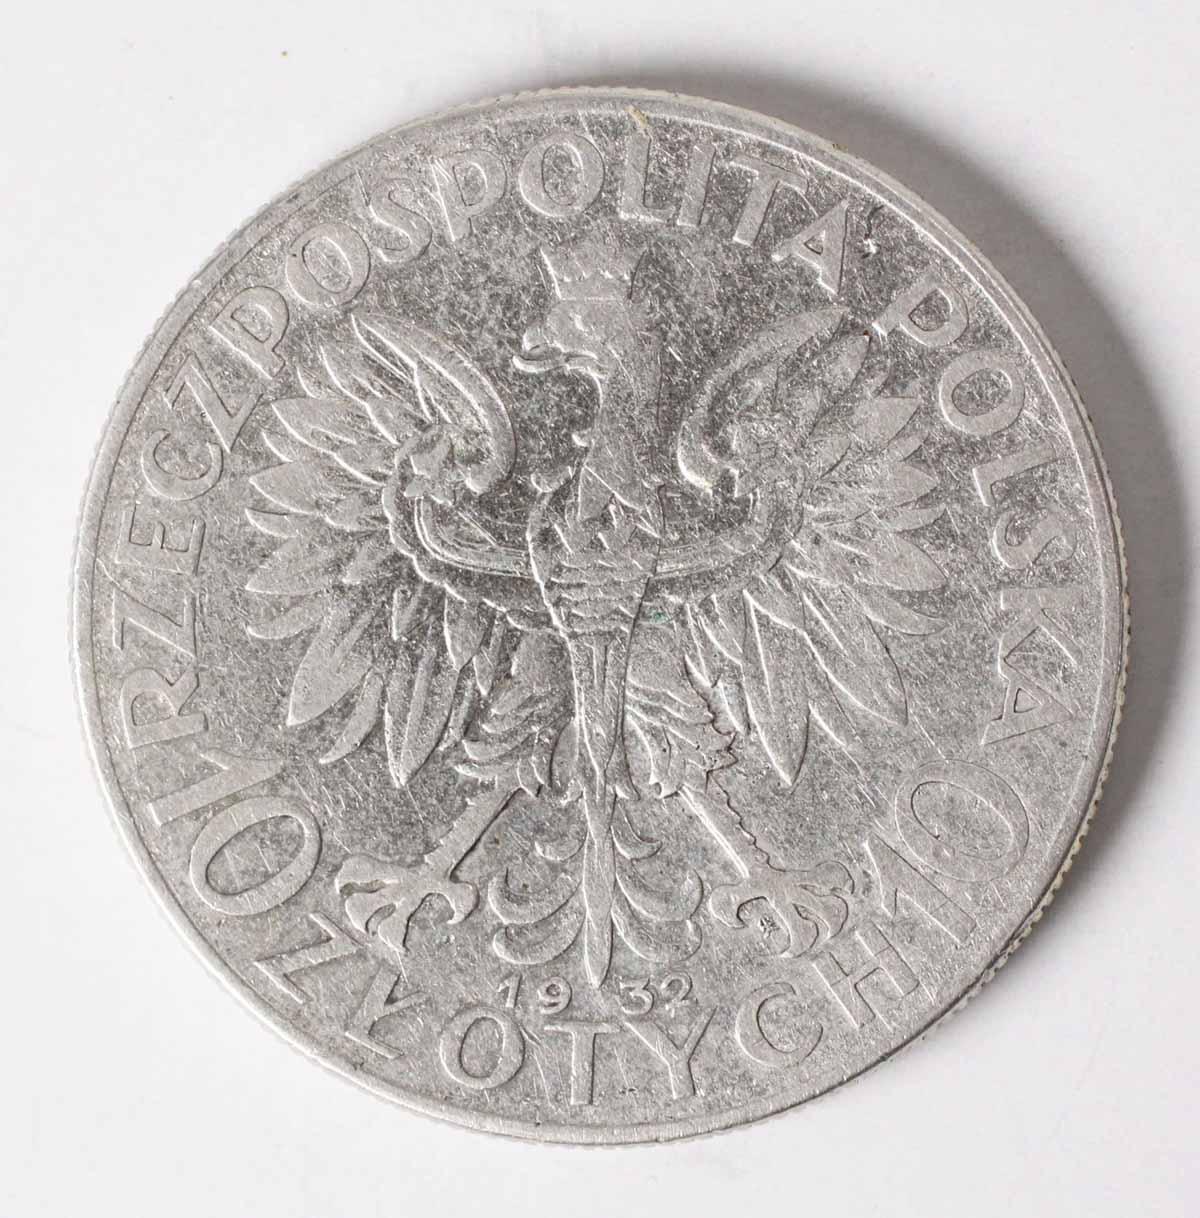 1932 Poland 10 Zlotych, "Queen Jadwiga